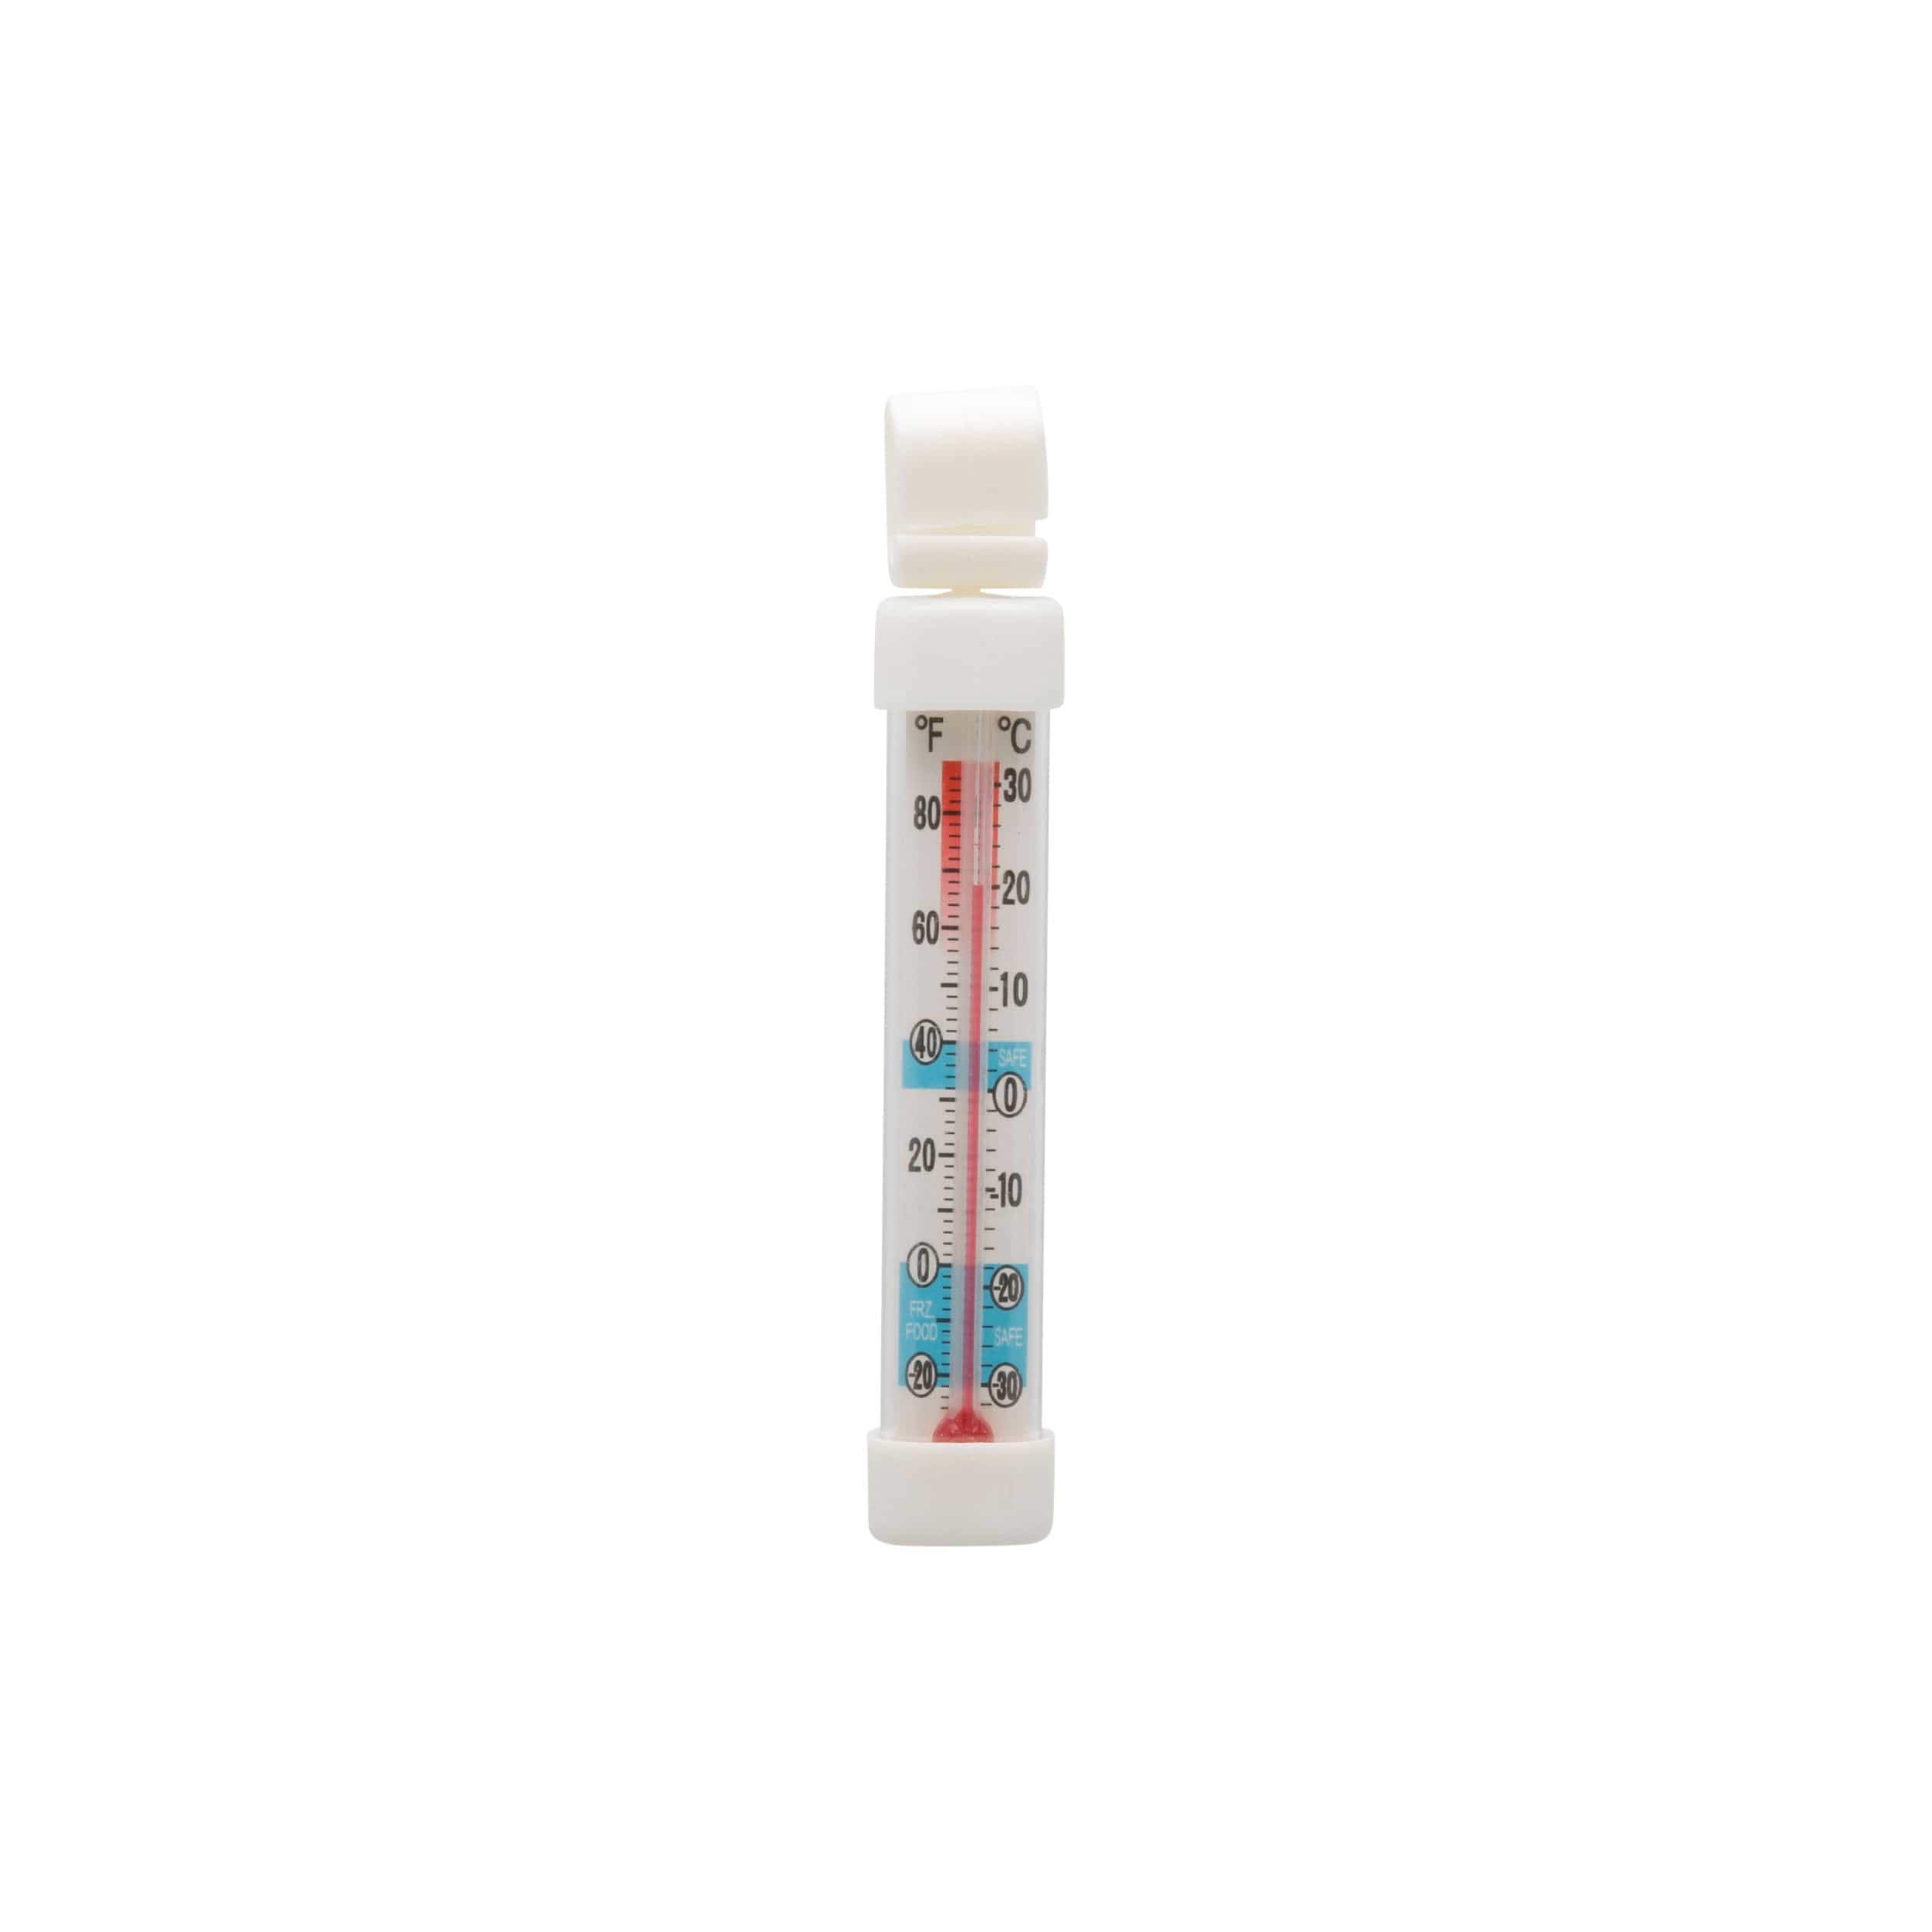 Safety Zone Refrigerator/Freezer Thermometer